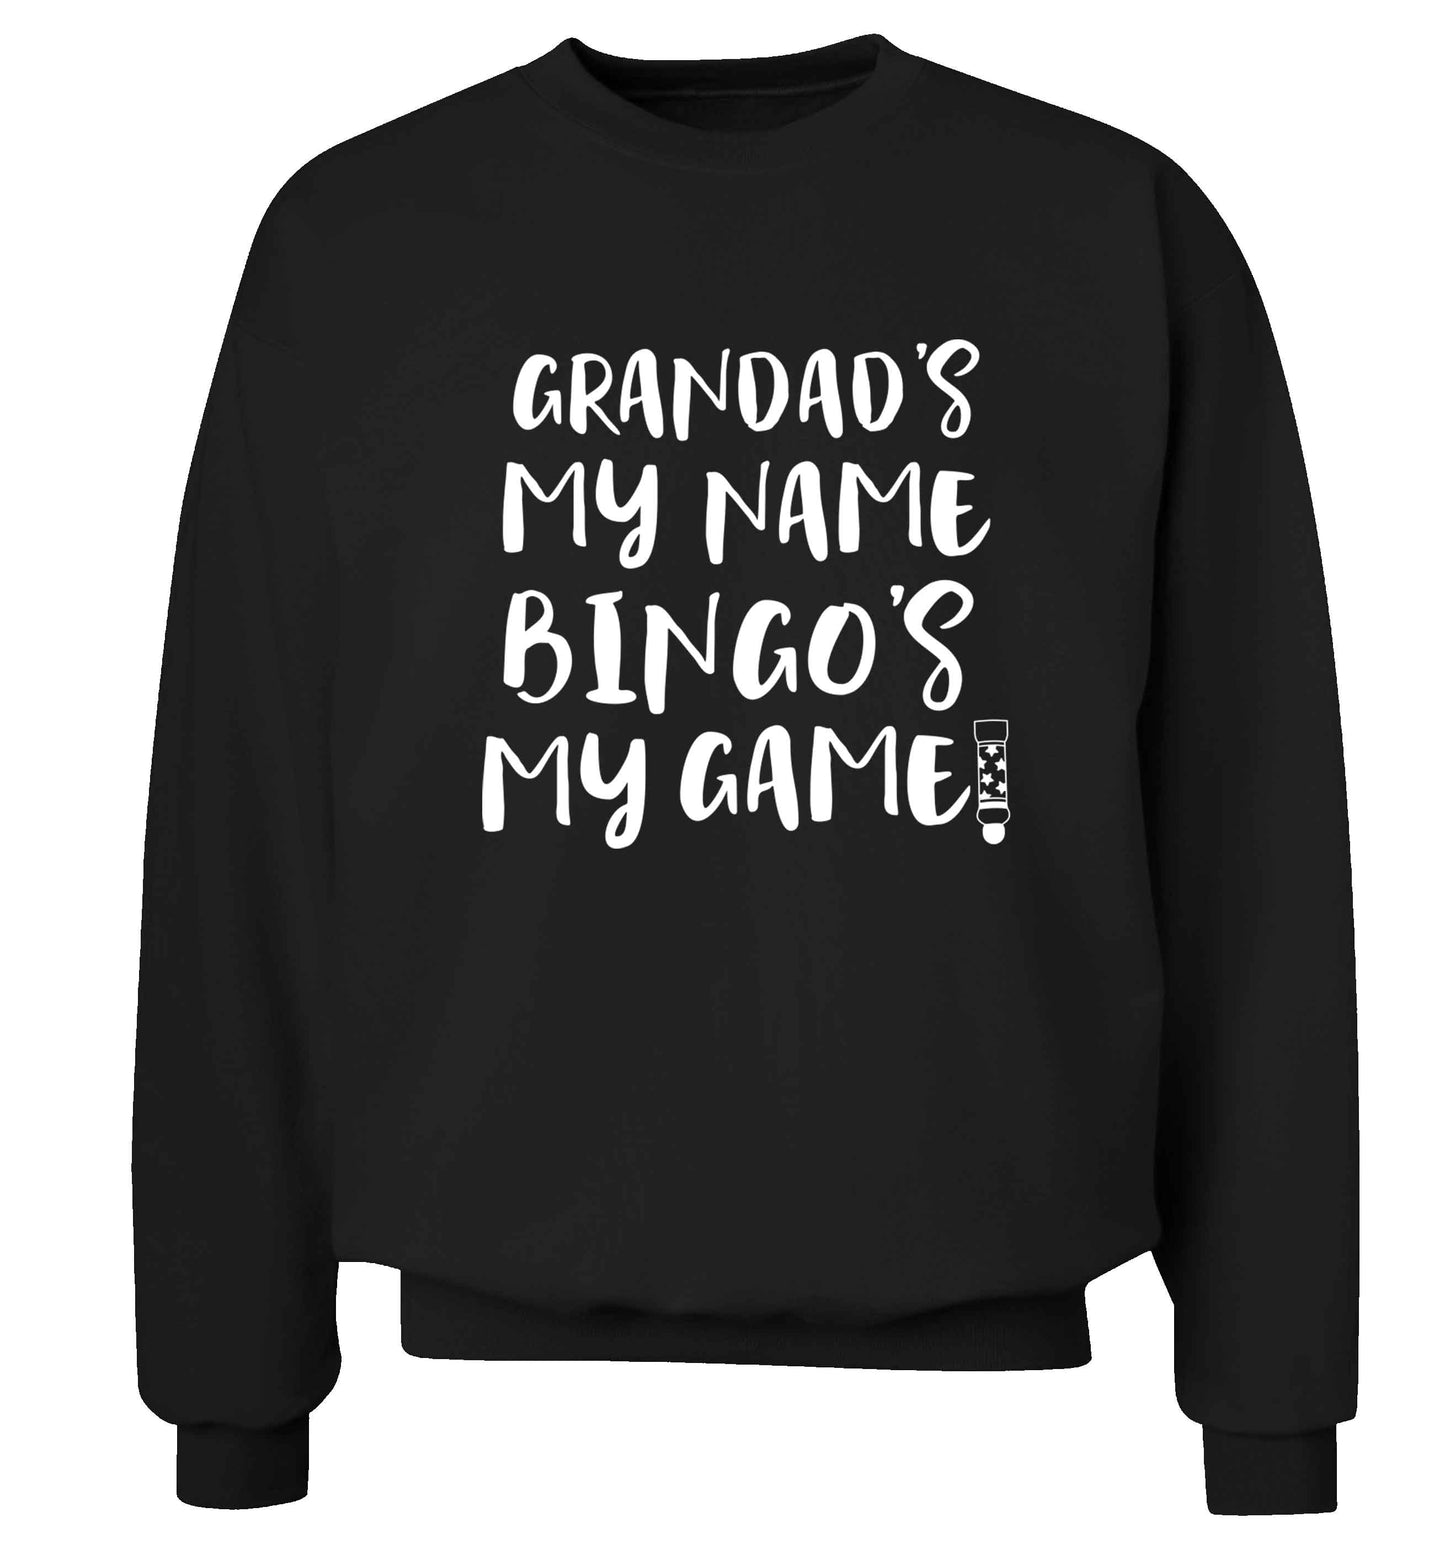 Grandad's my name bingo's my game! Adult's unisex black Sweater 2XL